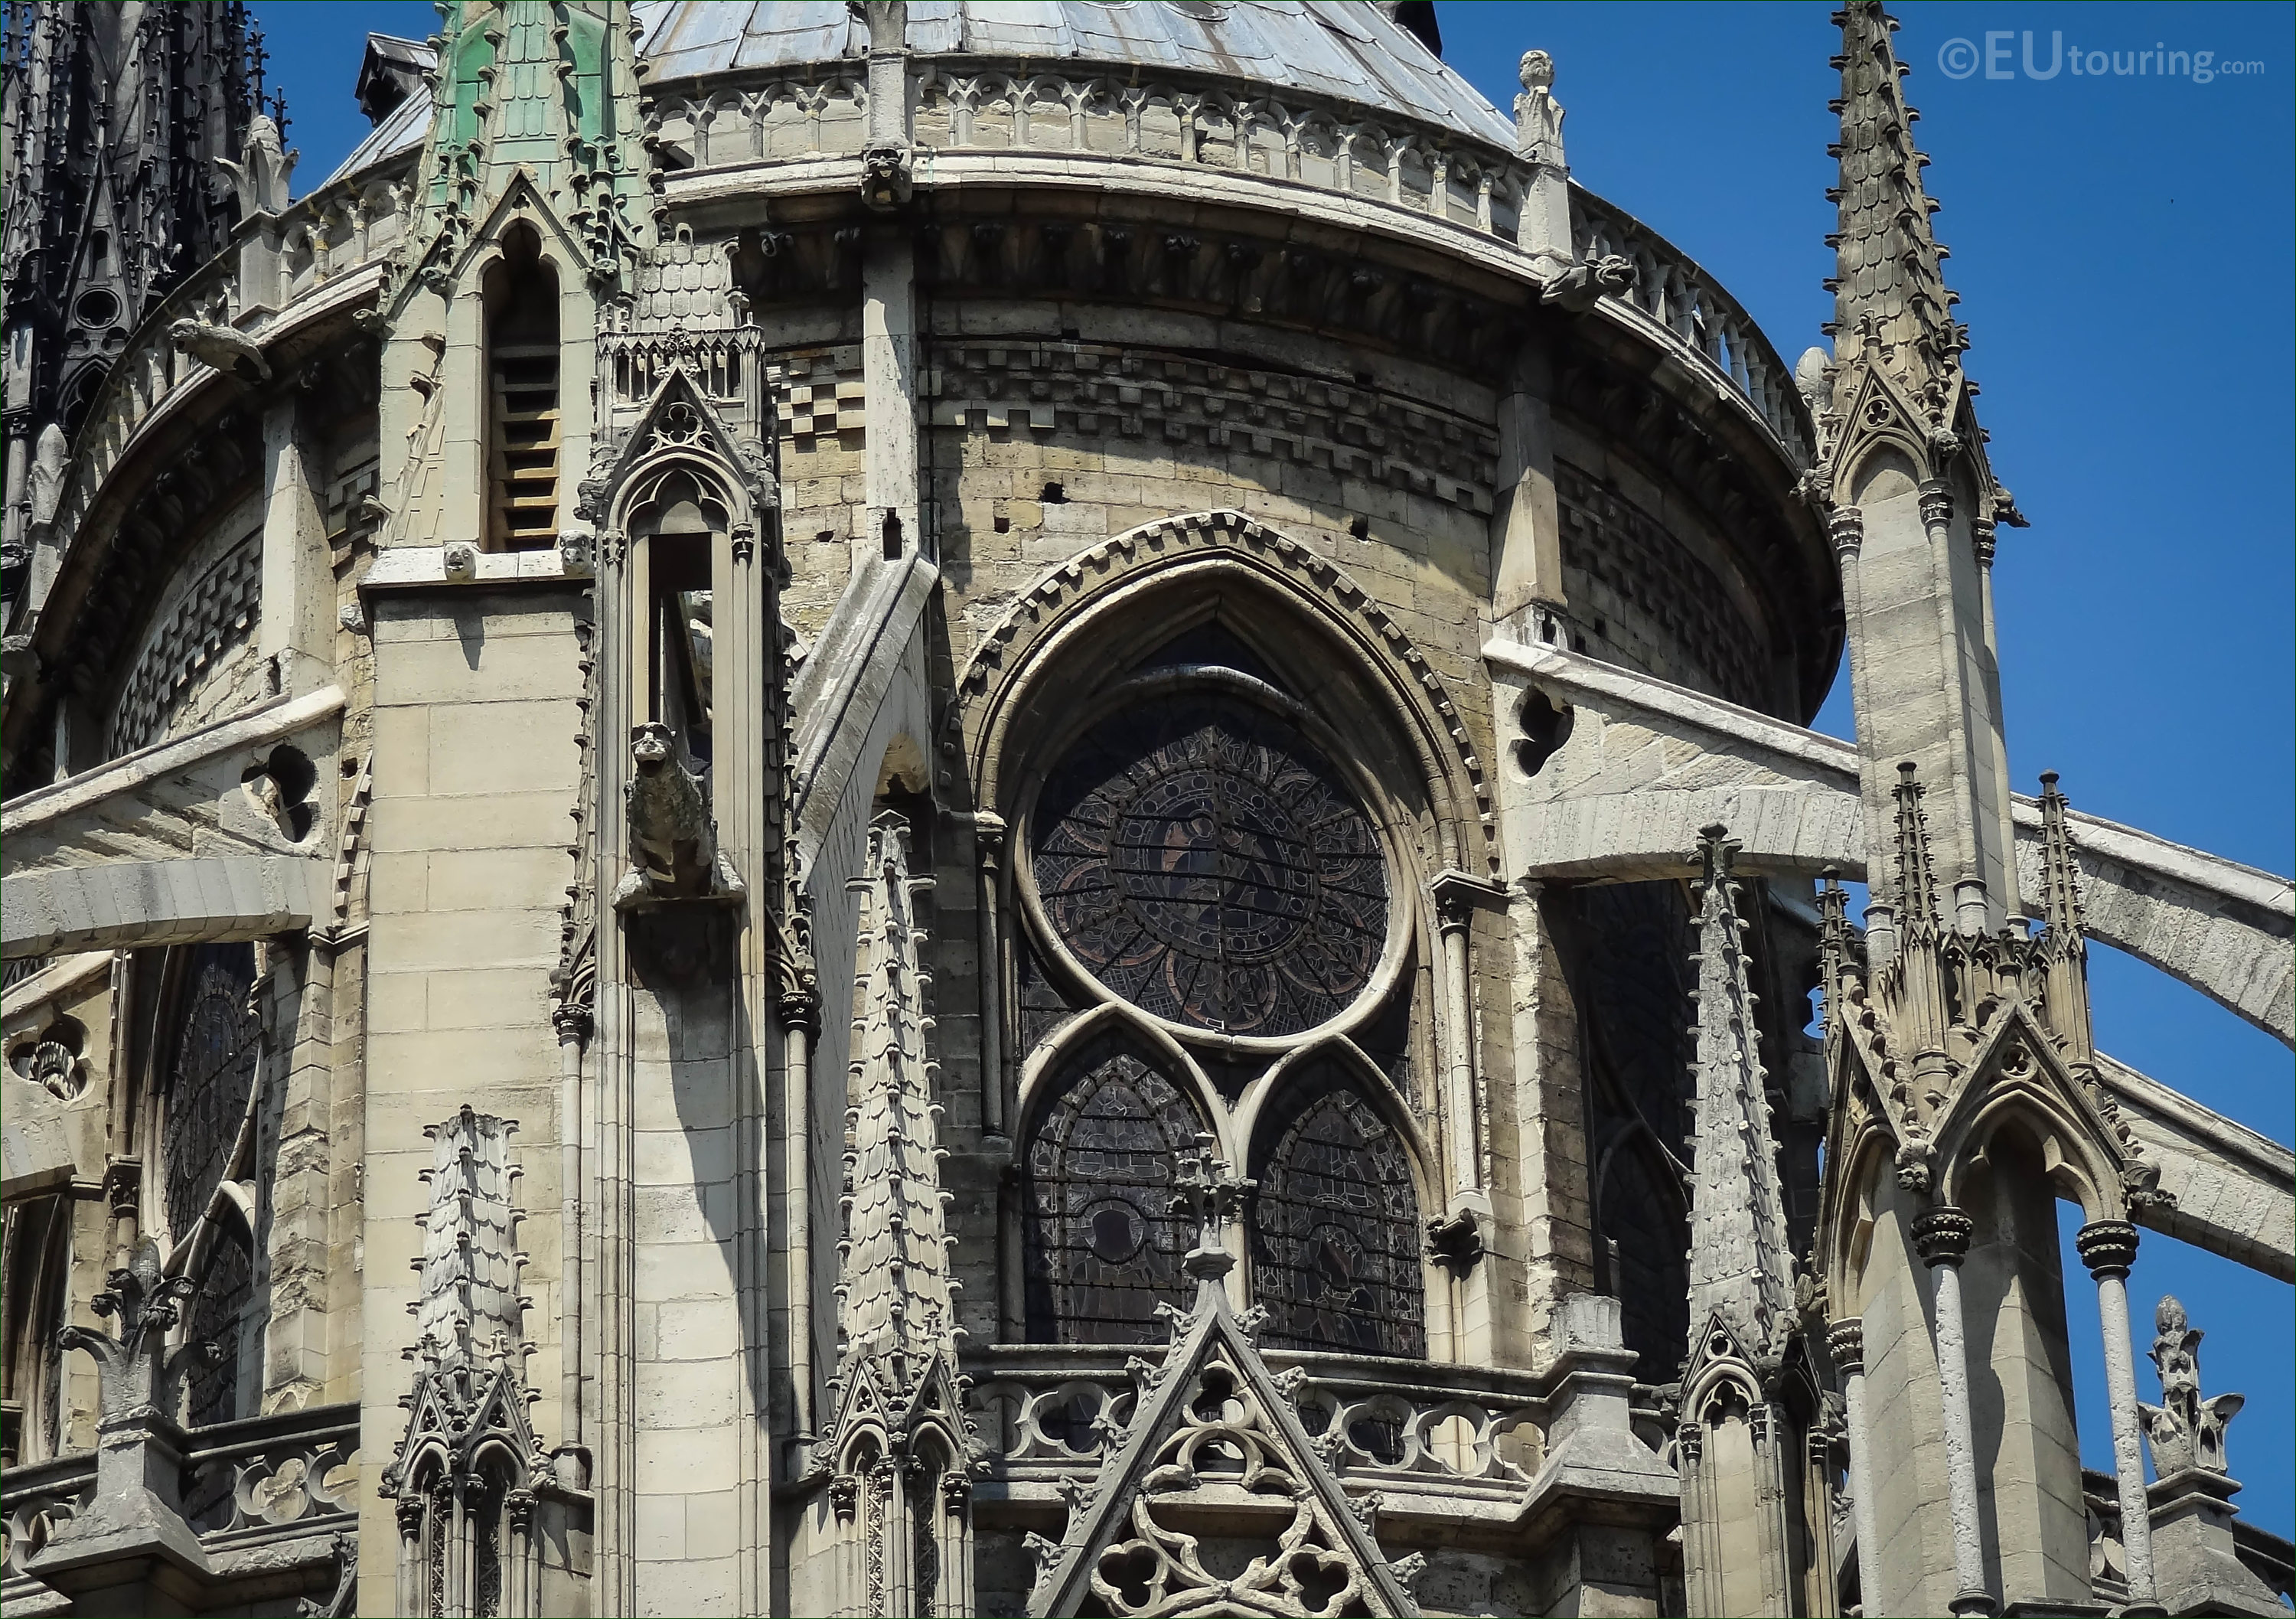 download history of gargoyles on churches